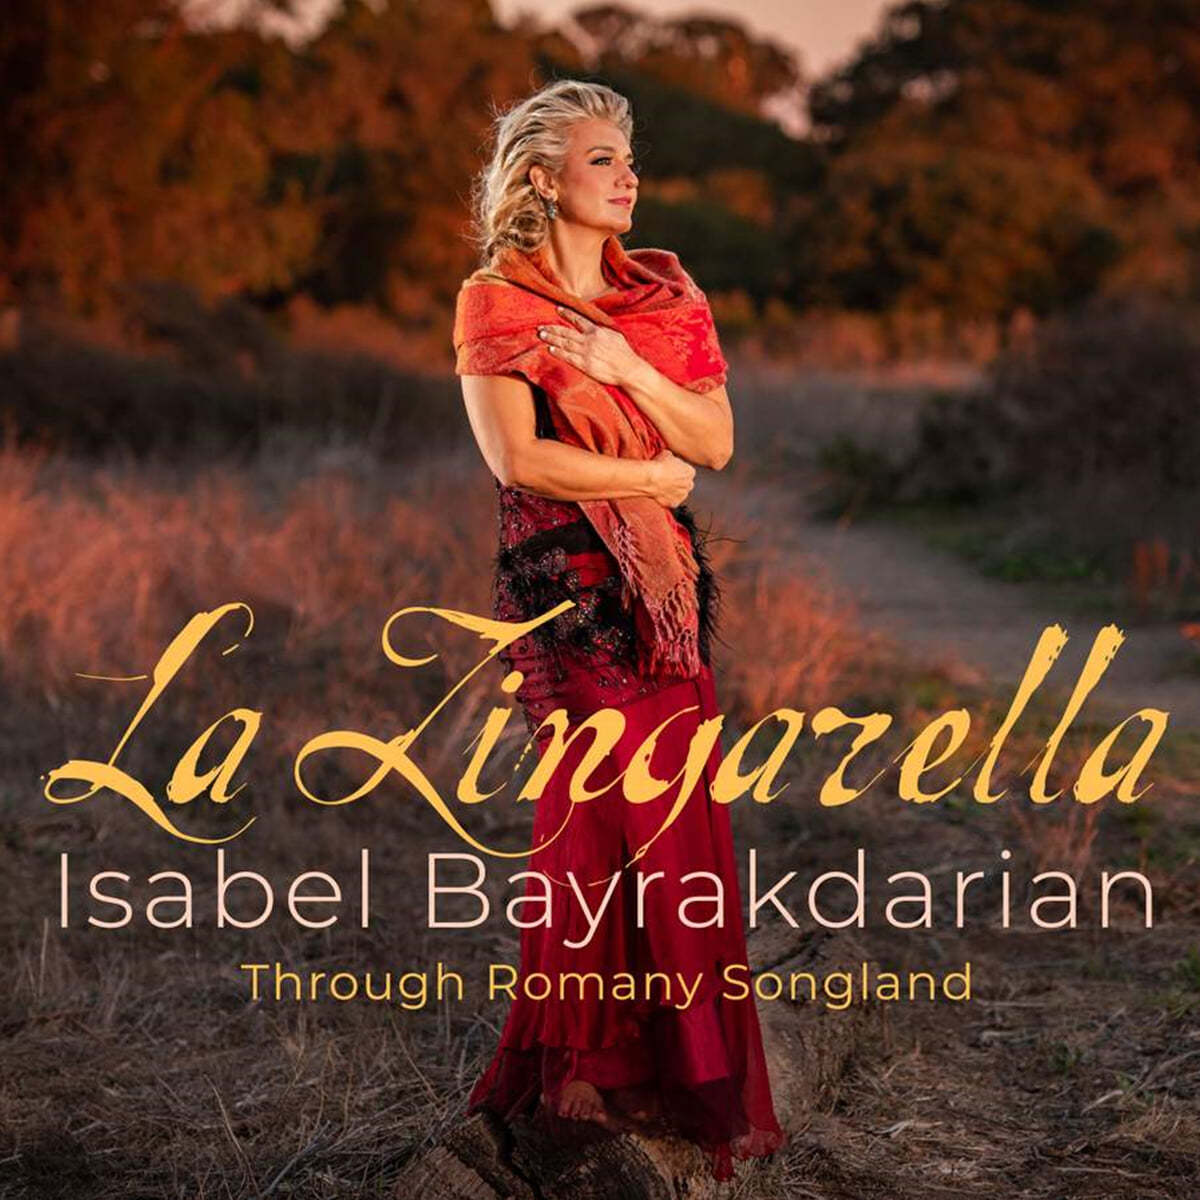 Isabel Bayrakdarian 집시 선율의 보컬 모음집 - 리스트 / 브람스 / 드보르작 / 비제 / 레하르 / 칼만 (La Zingarella)